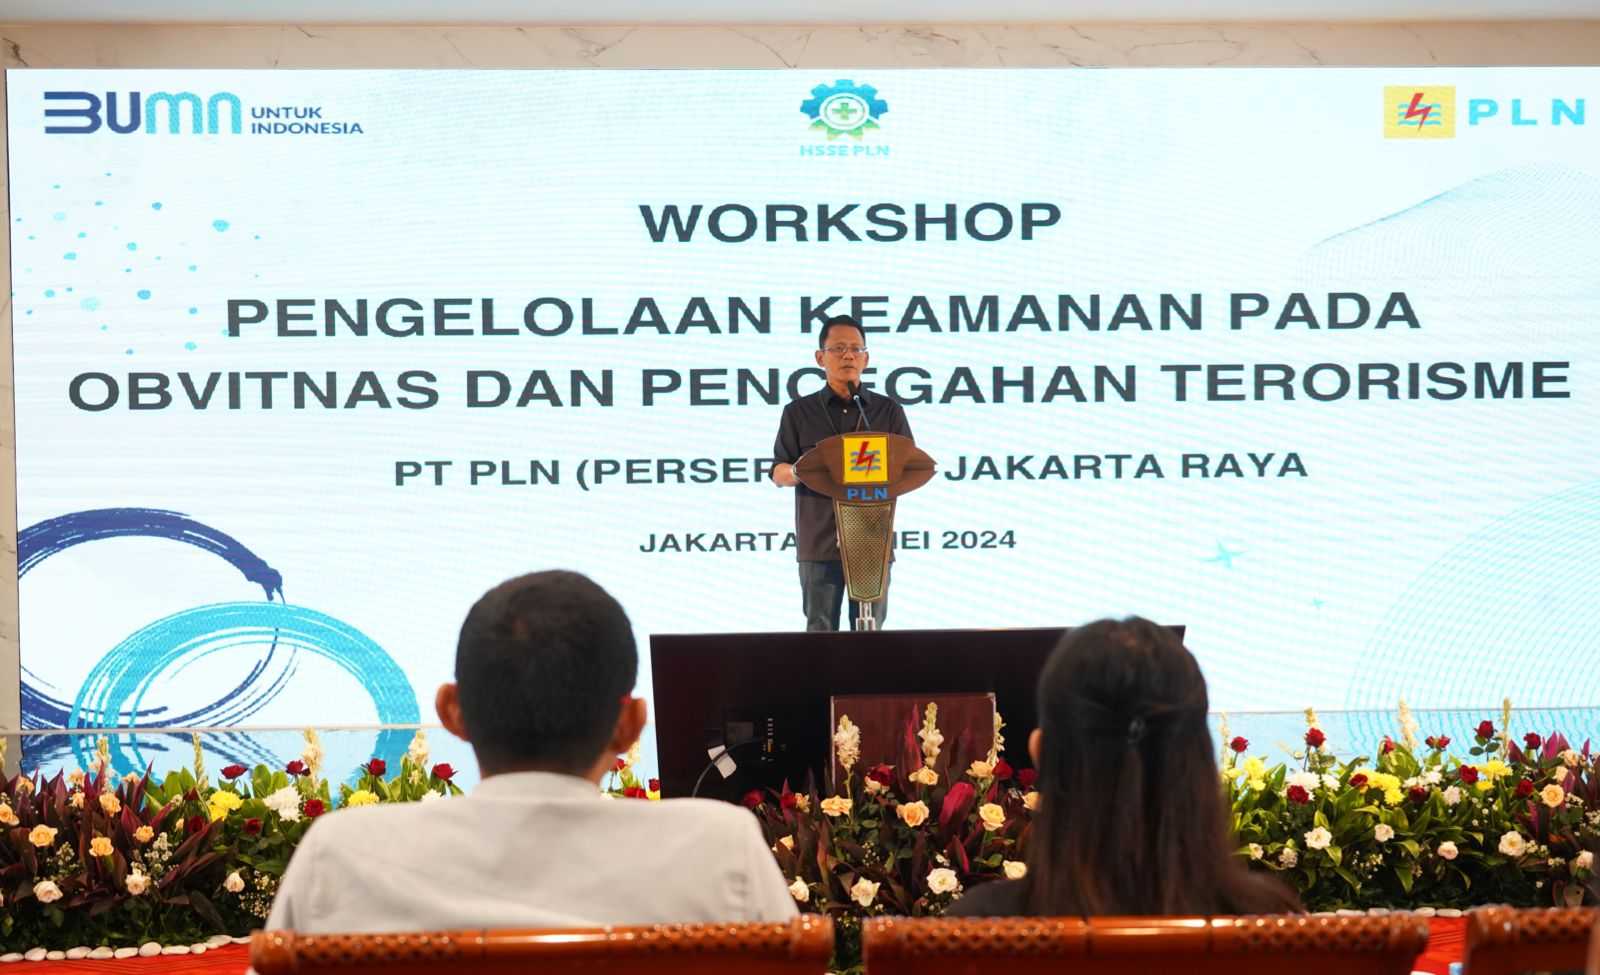 Pentingnya Pengamanan Aset Negara, PLN UID Jakarta Raya Gelar Workshop Pengelolaan Keamanan Obvitnas